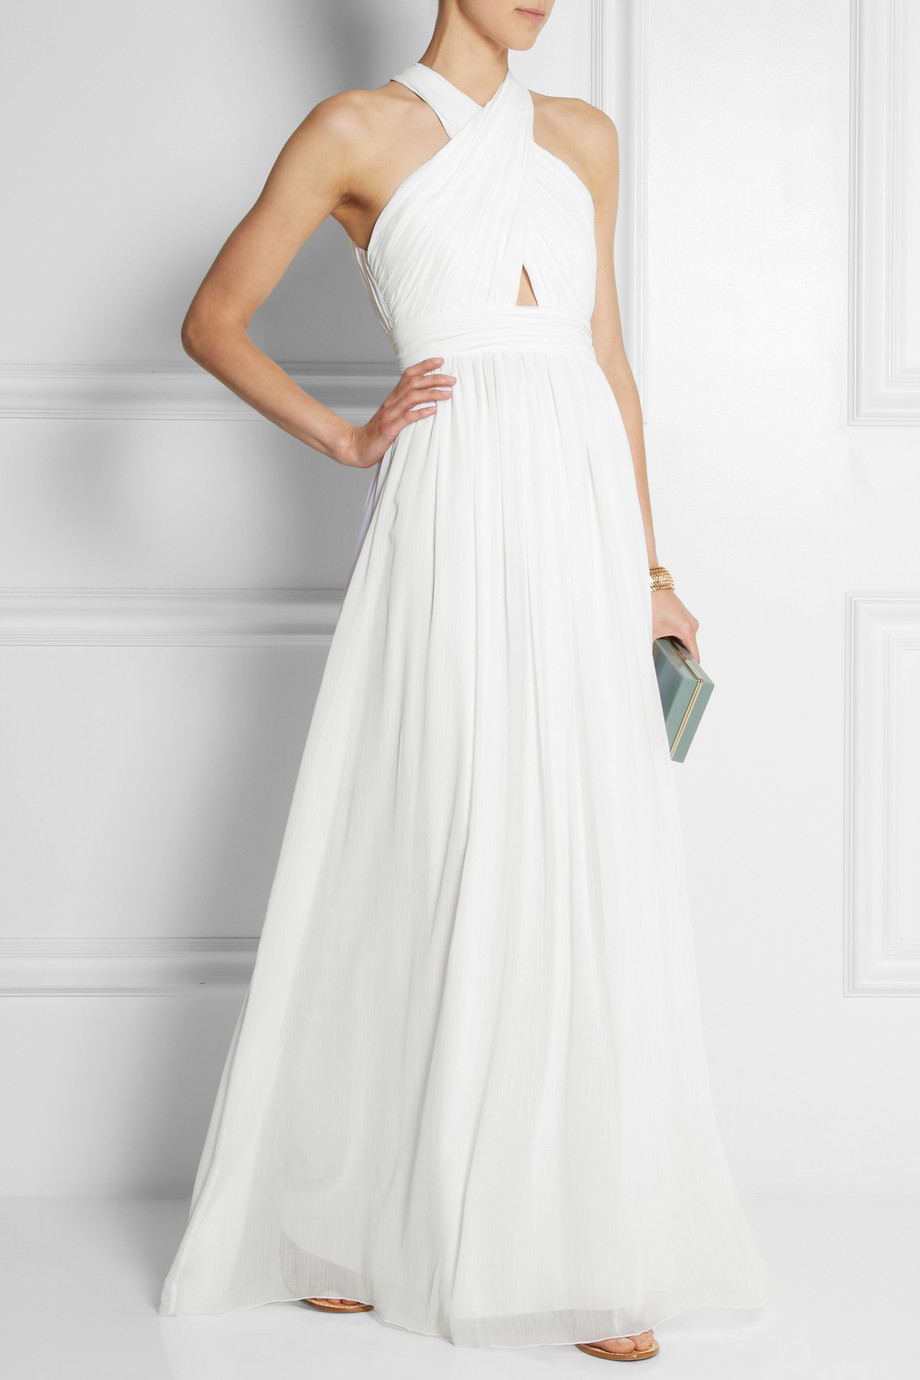 Lyst - Alice + Olivia Jaelyn Cutout Chiffon Maxi Dress in White